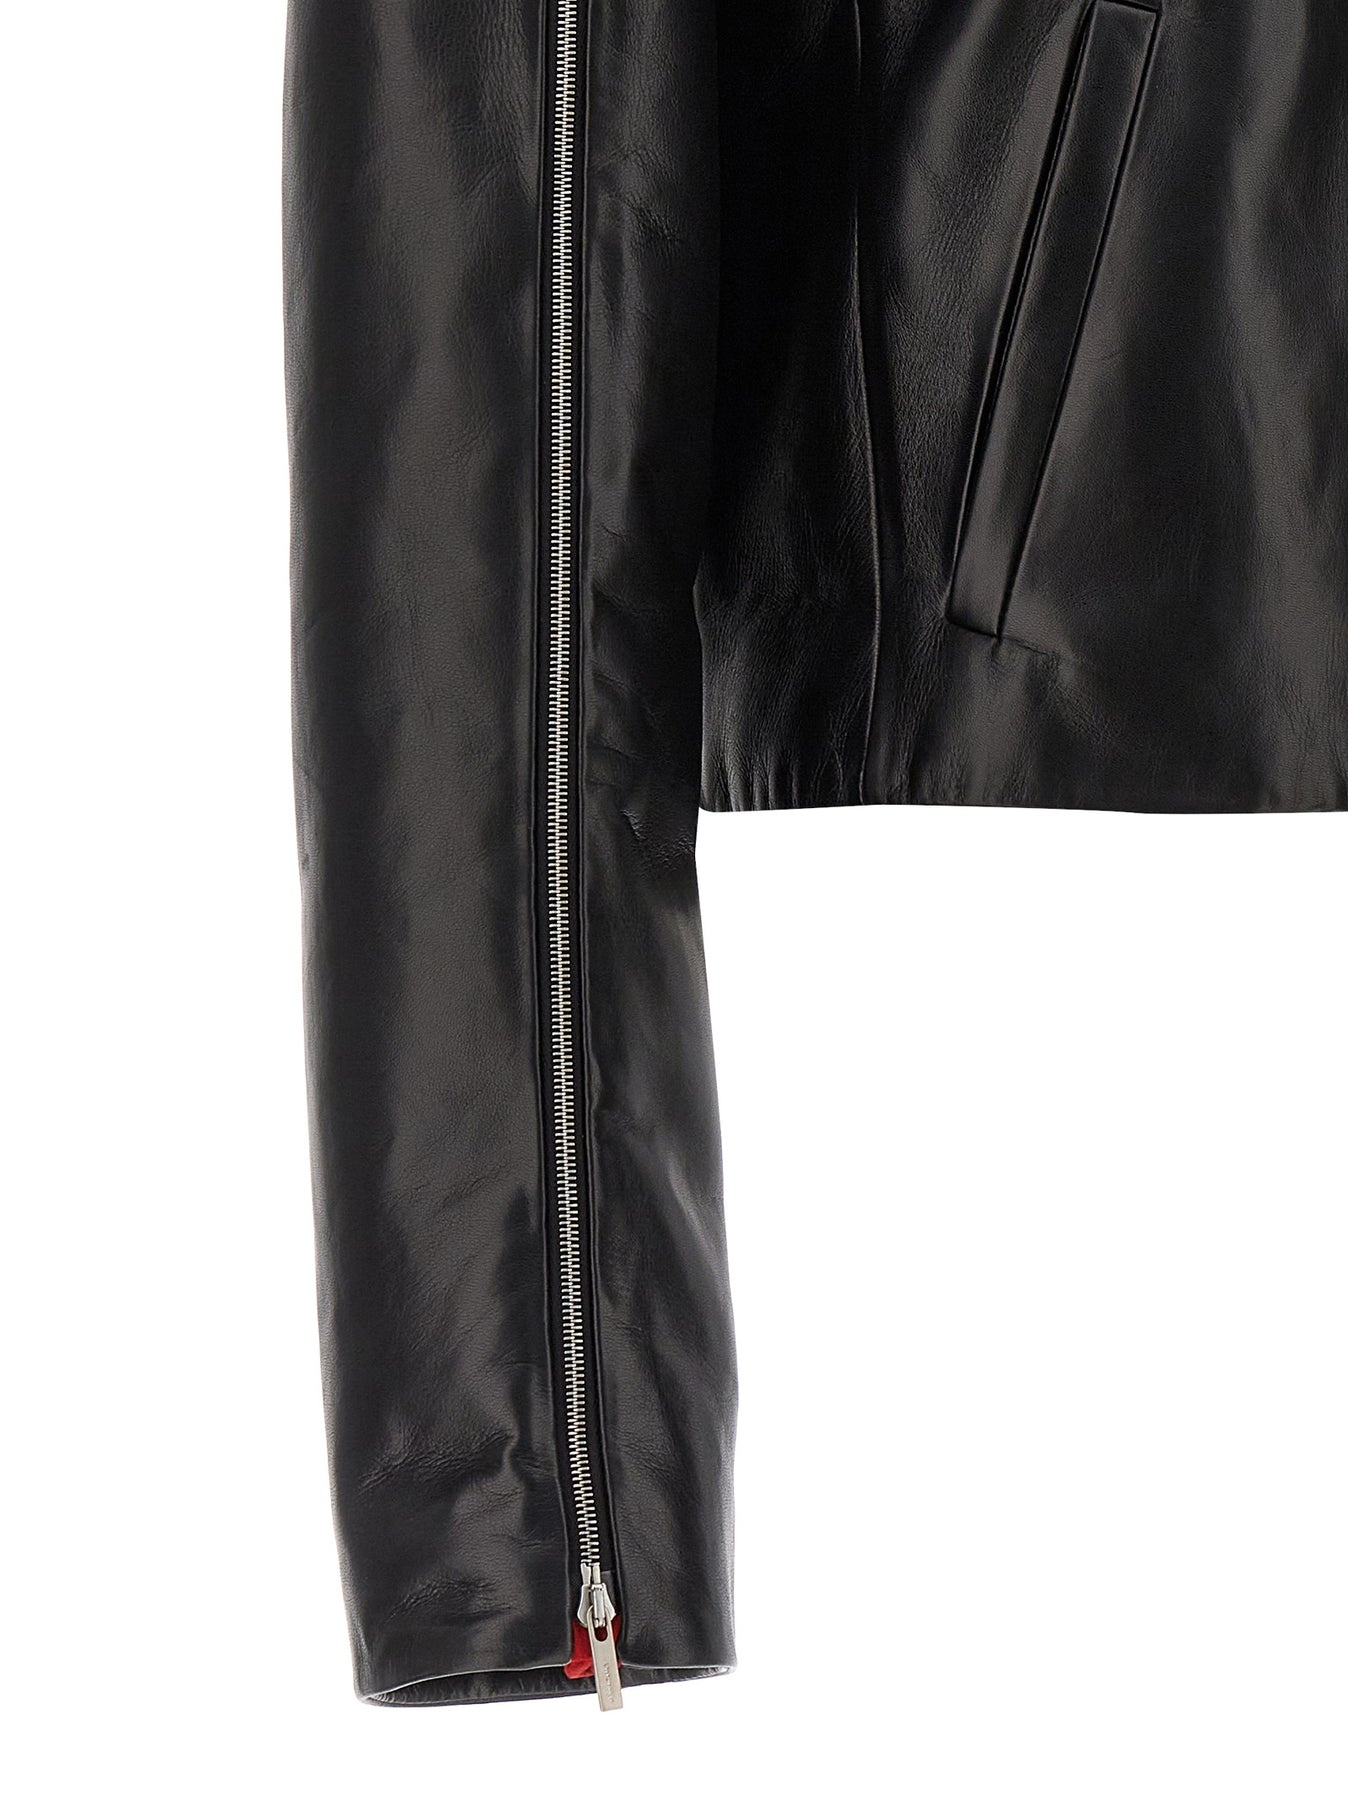 Leather Blouson Casual Jackets, Parka Black - 4